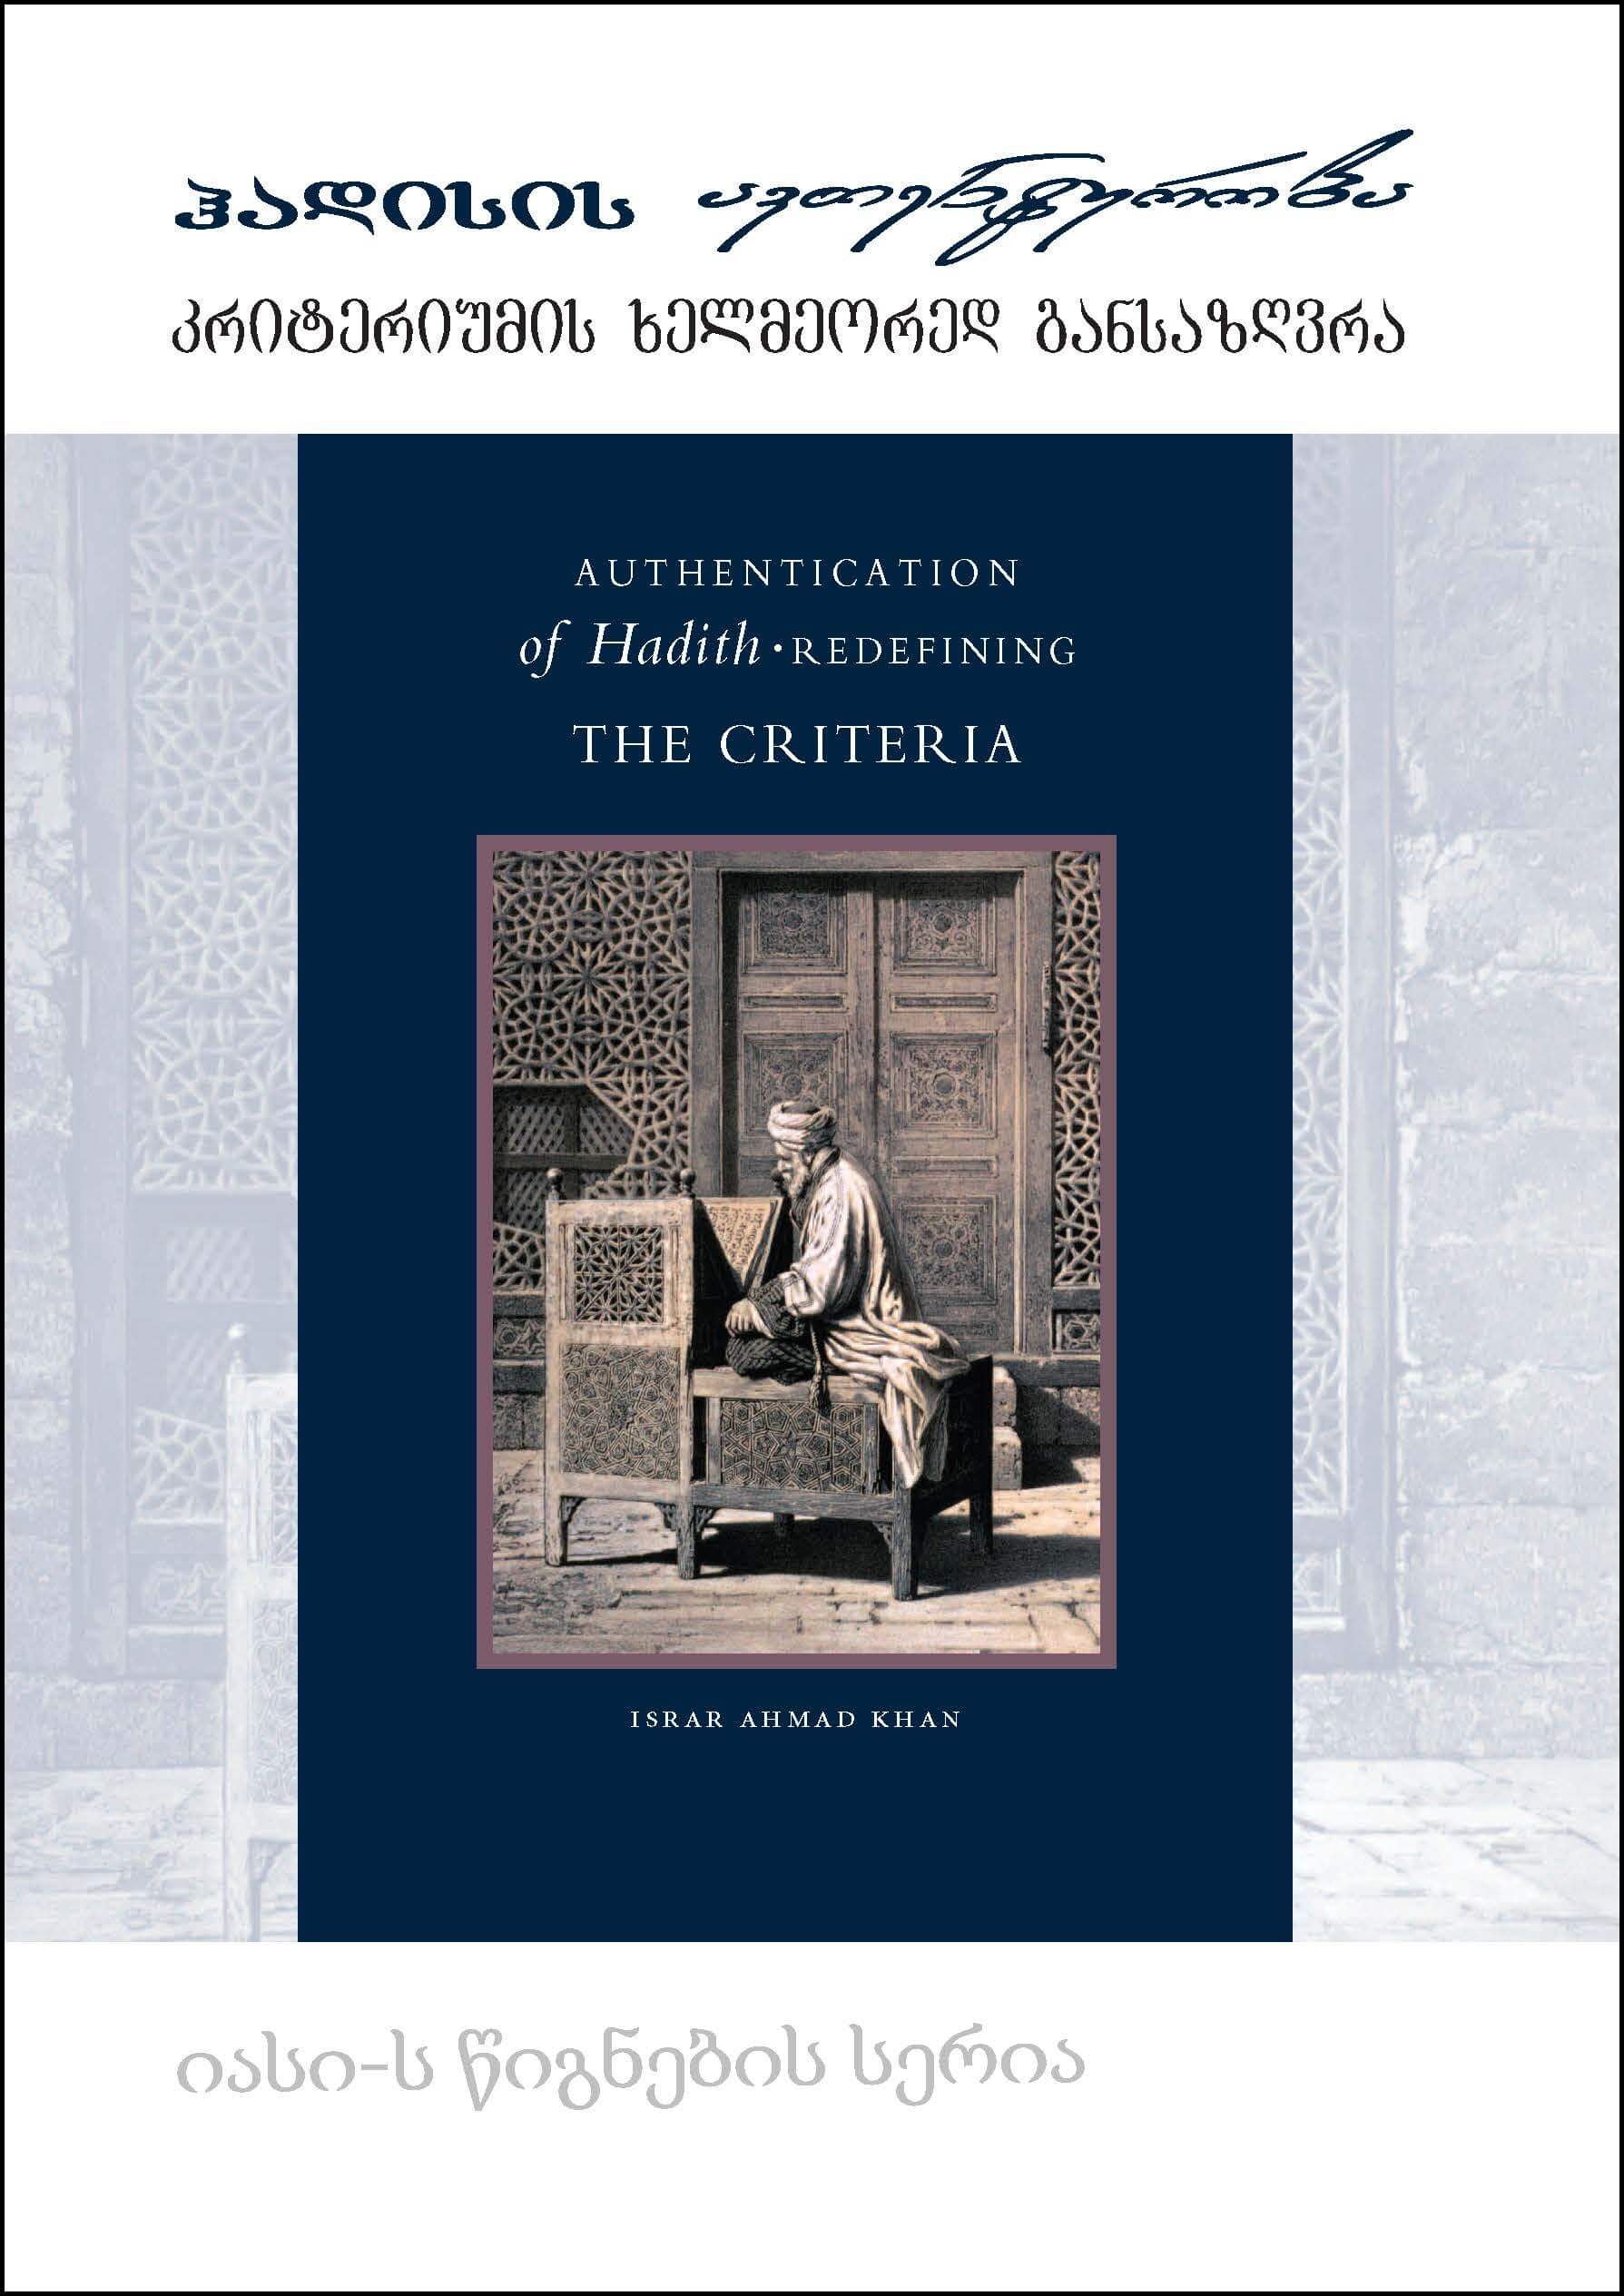 Georgian: hadisis avTenturoba kriteriumis xelmeored gansazRvra (Books-in-Brief: Authentication of Hadith: Redefining the Criteria)